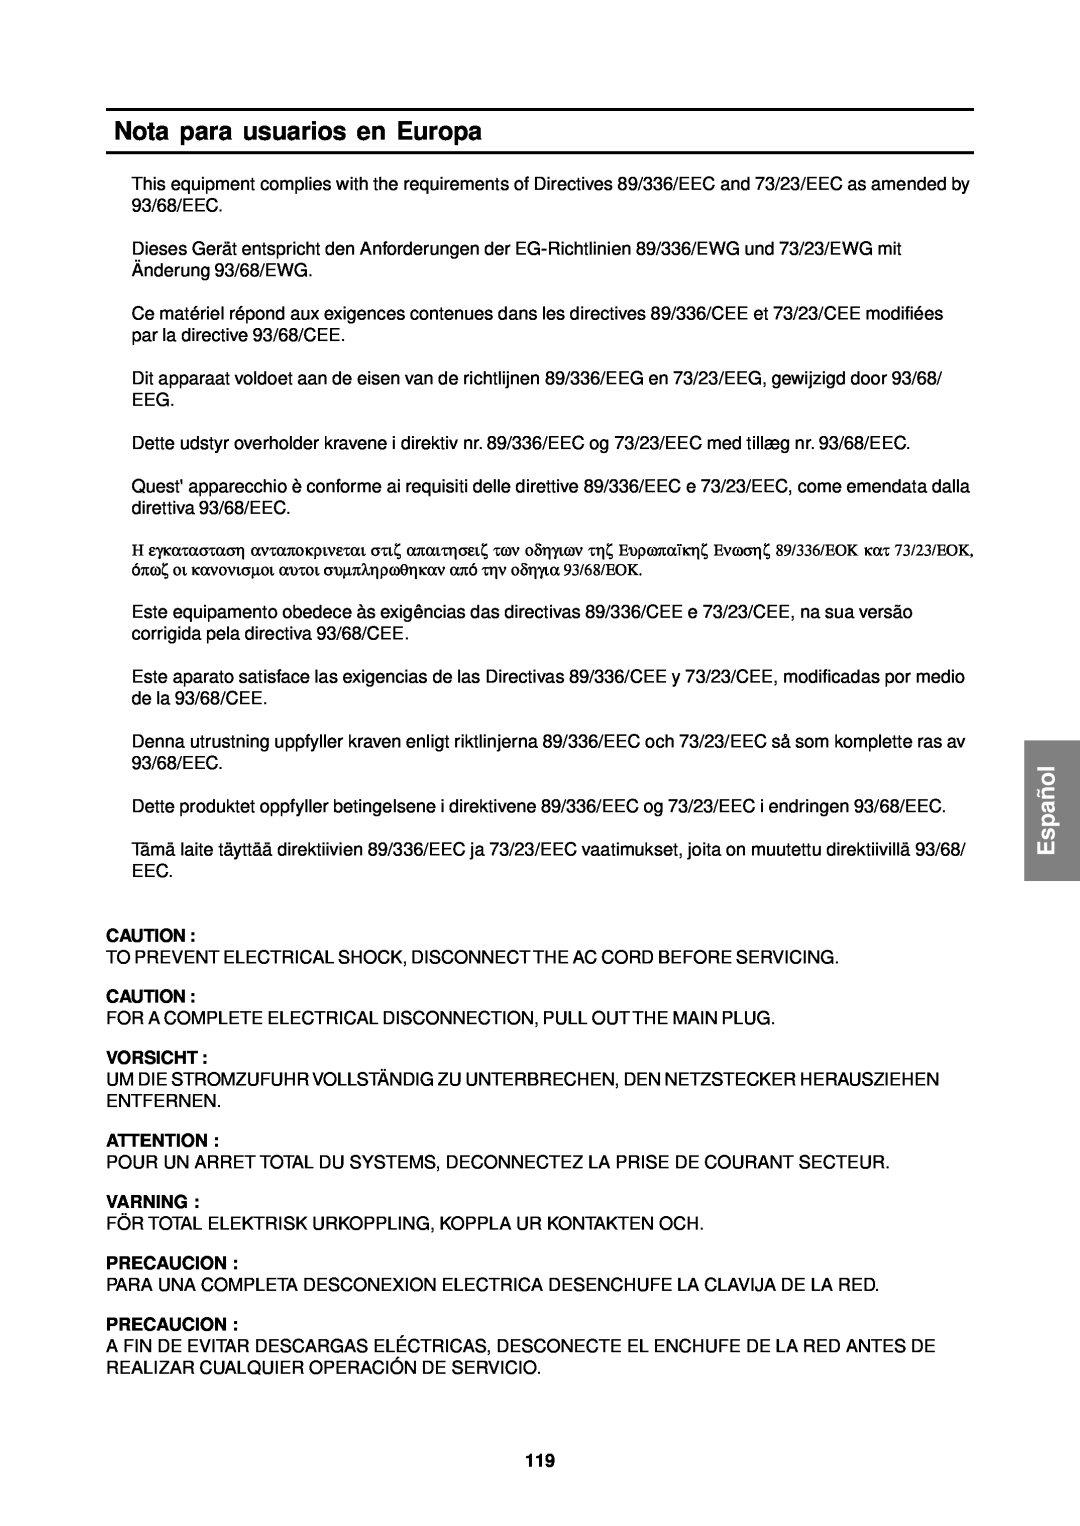 Sharp LL-T1610W operation manual Nota para usuarios en Europa, Español, Vorsicht, Varning, Precaucion 